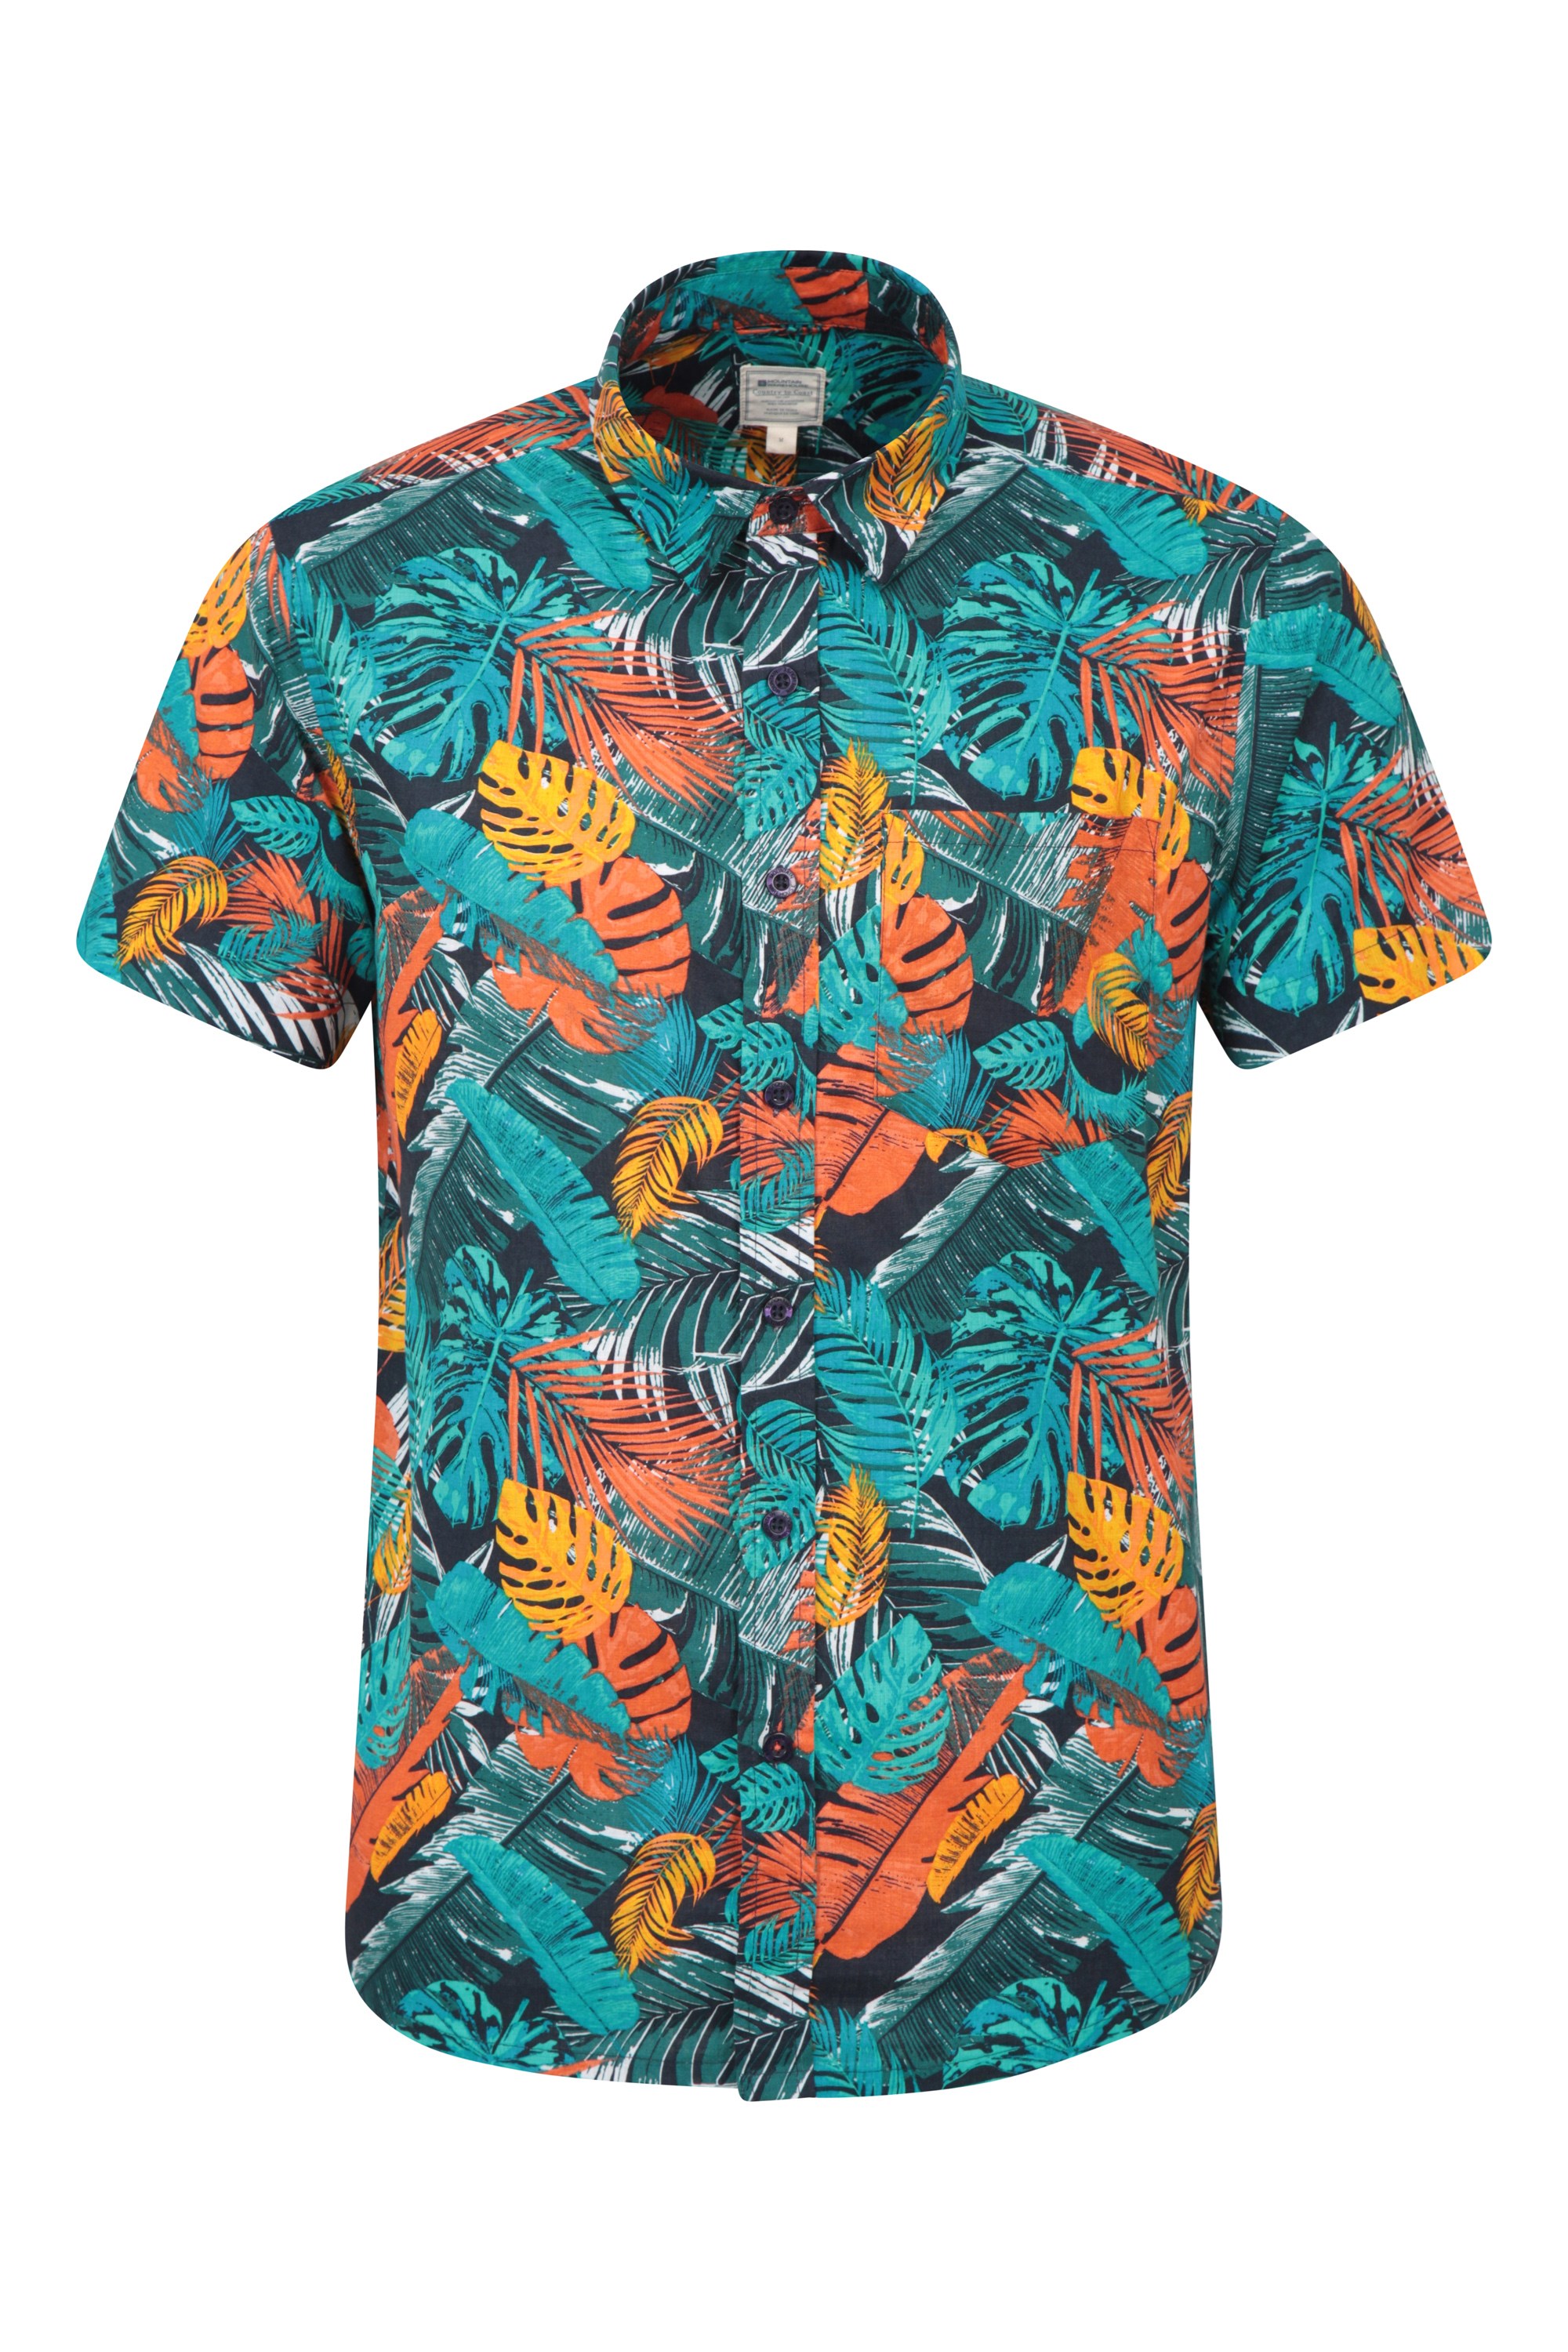 Chemise Homme à manches courtes Hawaiian - Turquoise